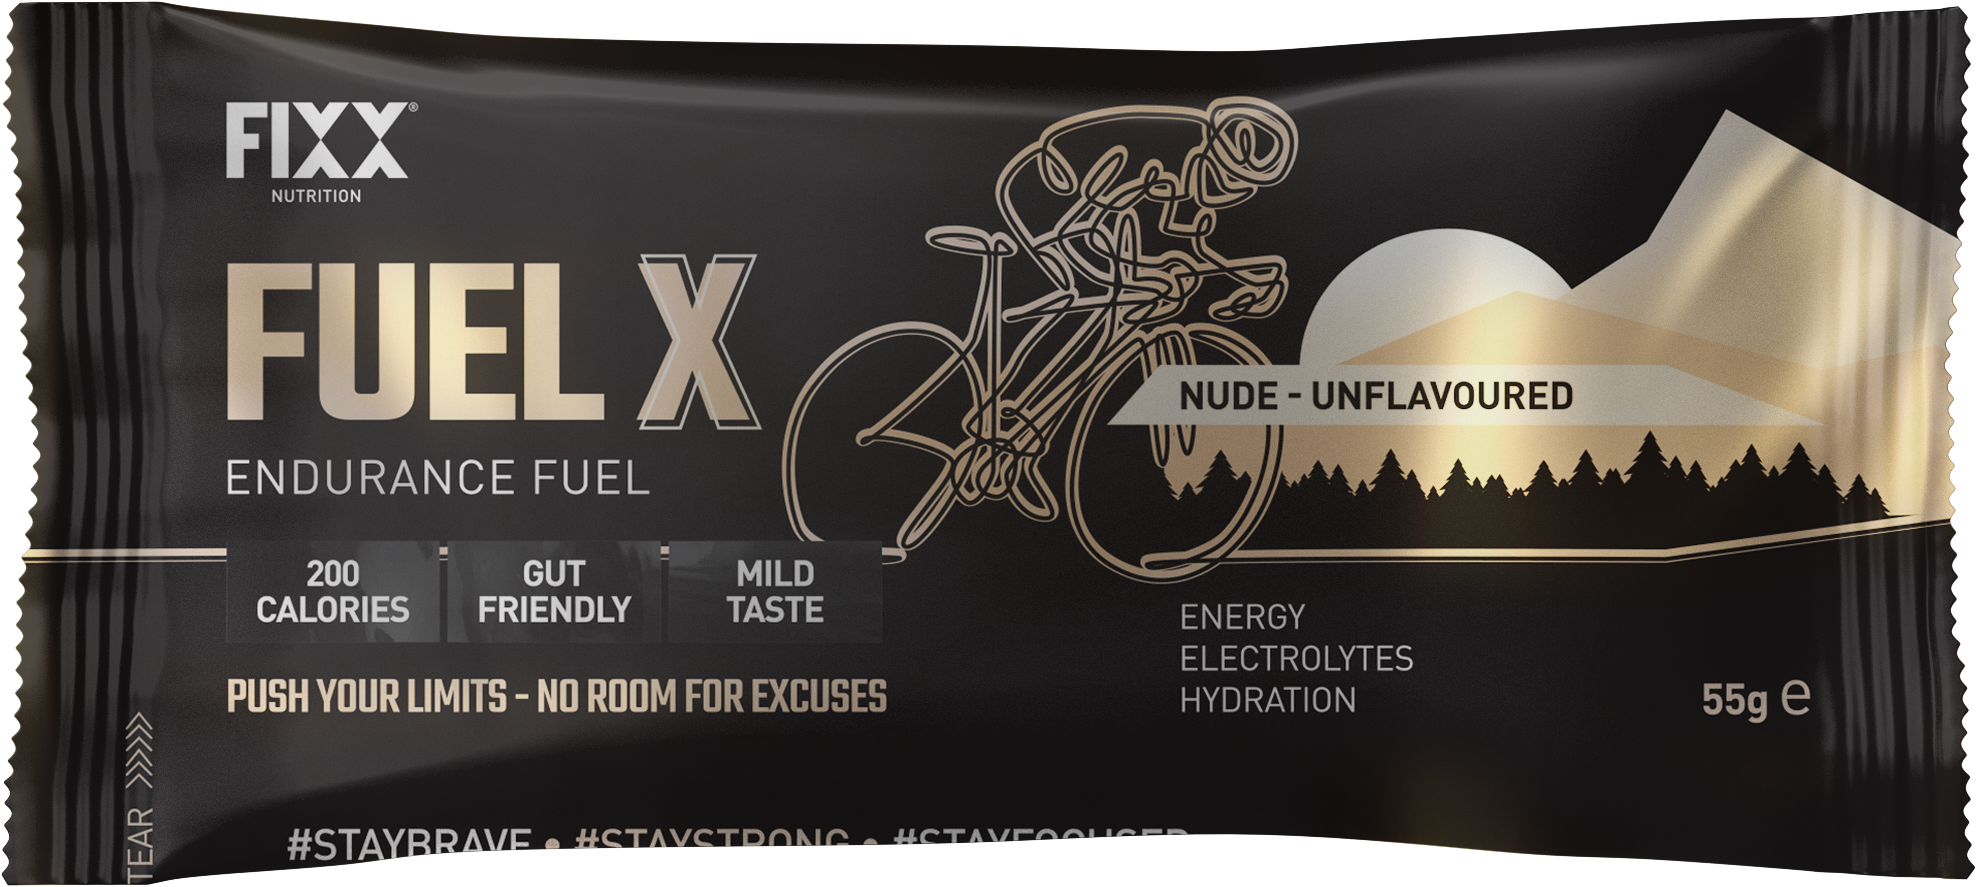 Fixx Nutrition Fuel X 55g Sachet - Nude